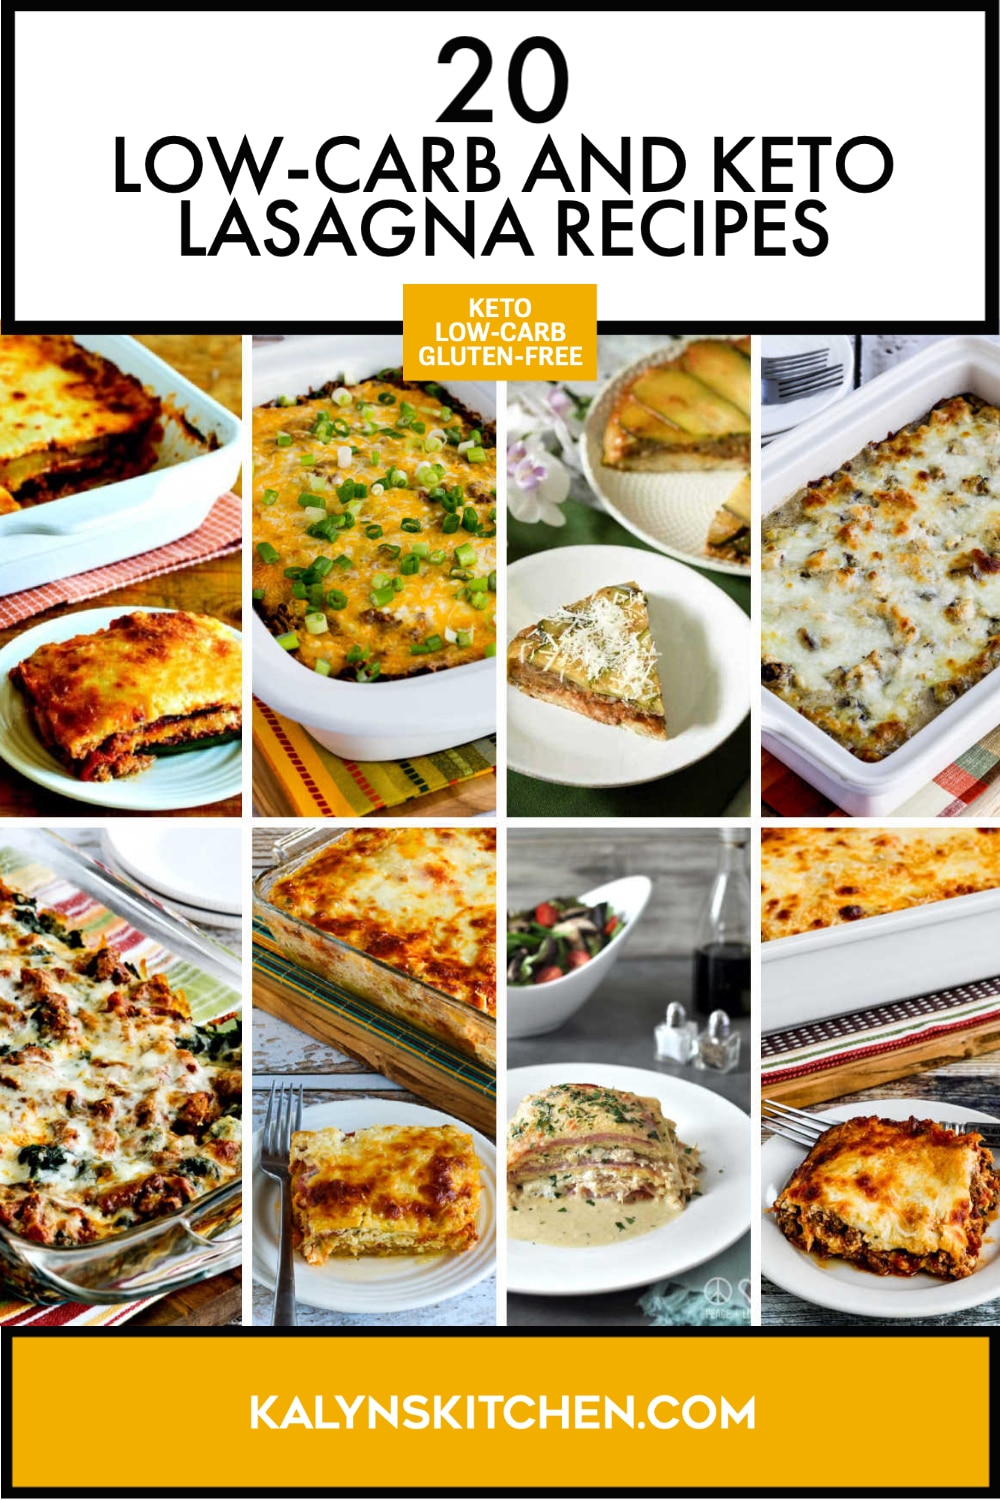 Pinterest image of 20 Low-Carb and Keto Lasagna Recipes